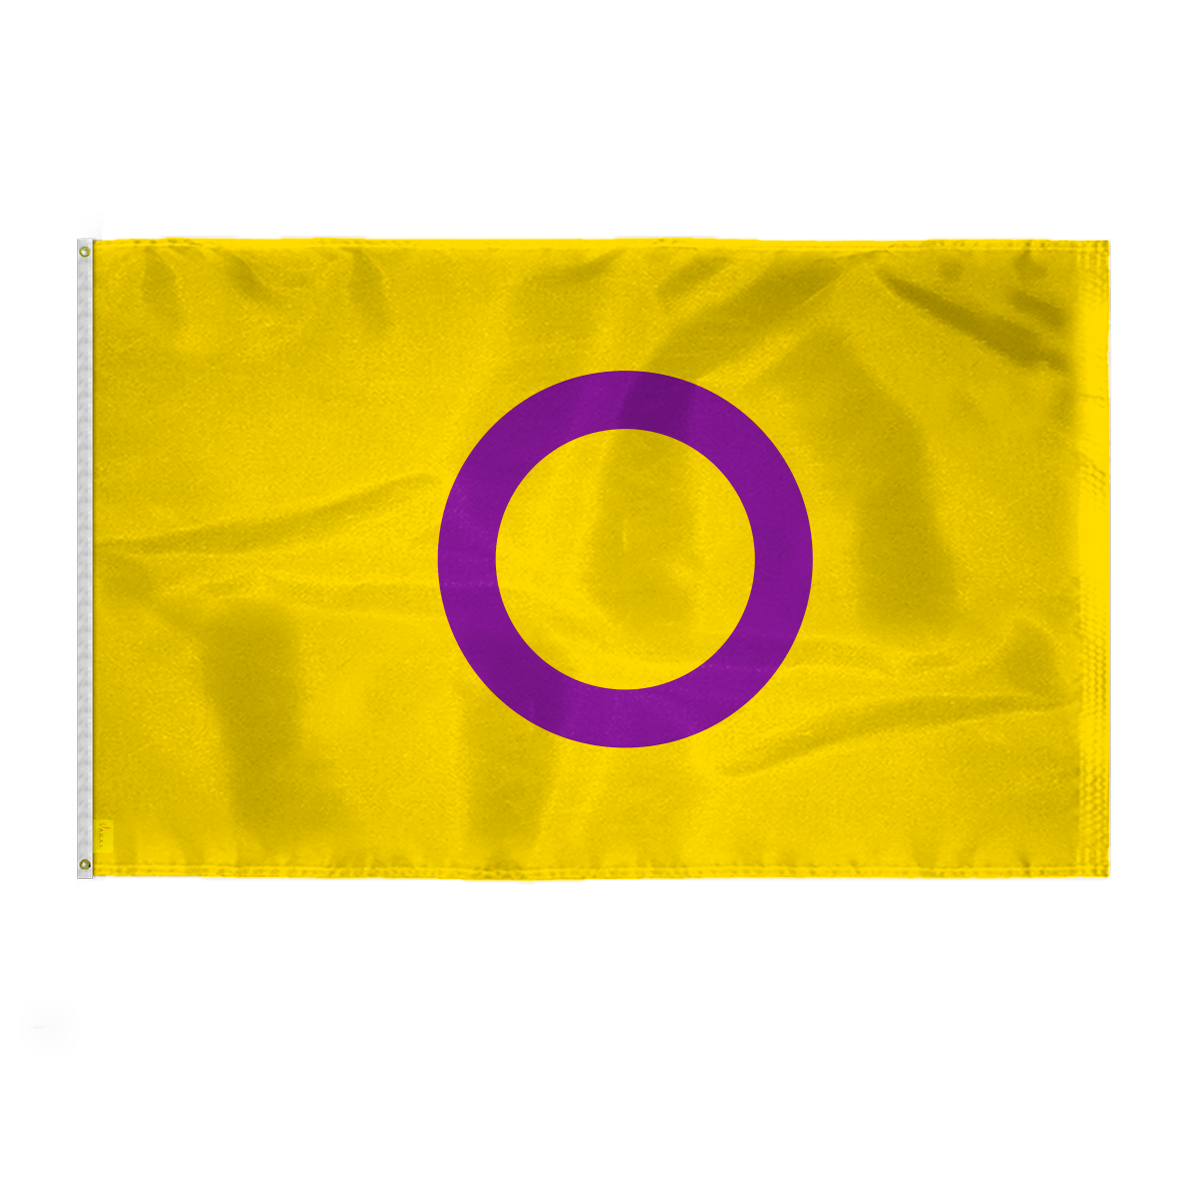 AGAS Intersex Pride Flag 5x8 Ft - Printed 200D Nylon